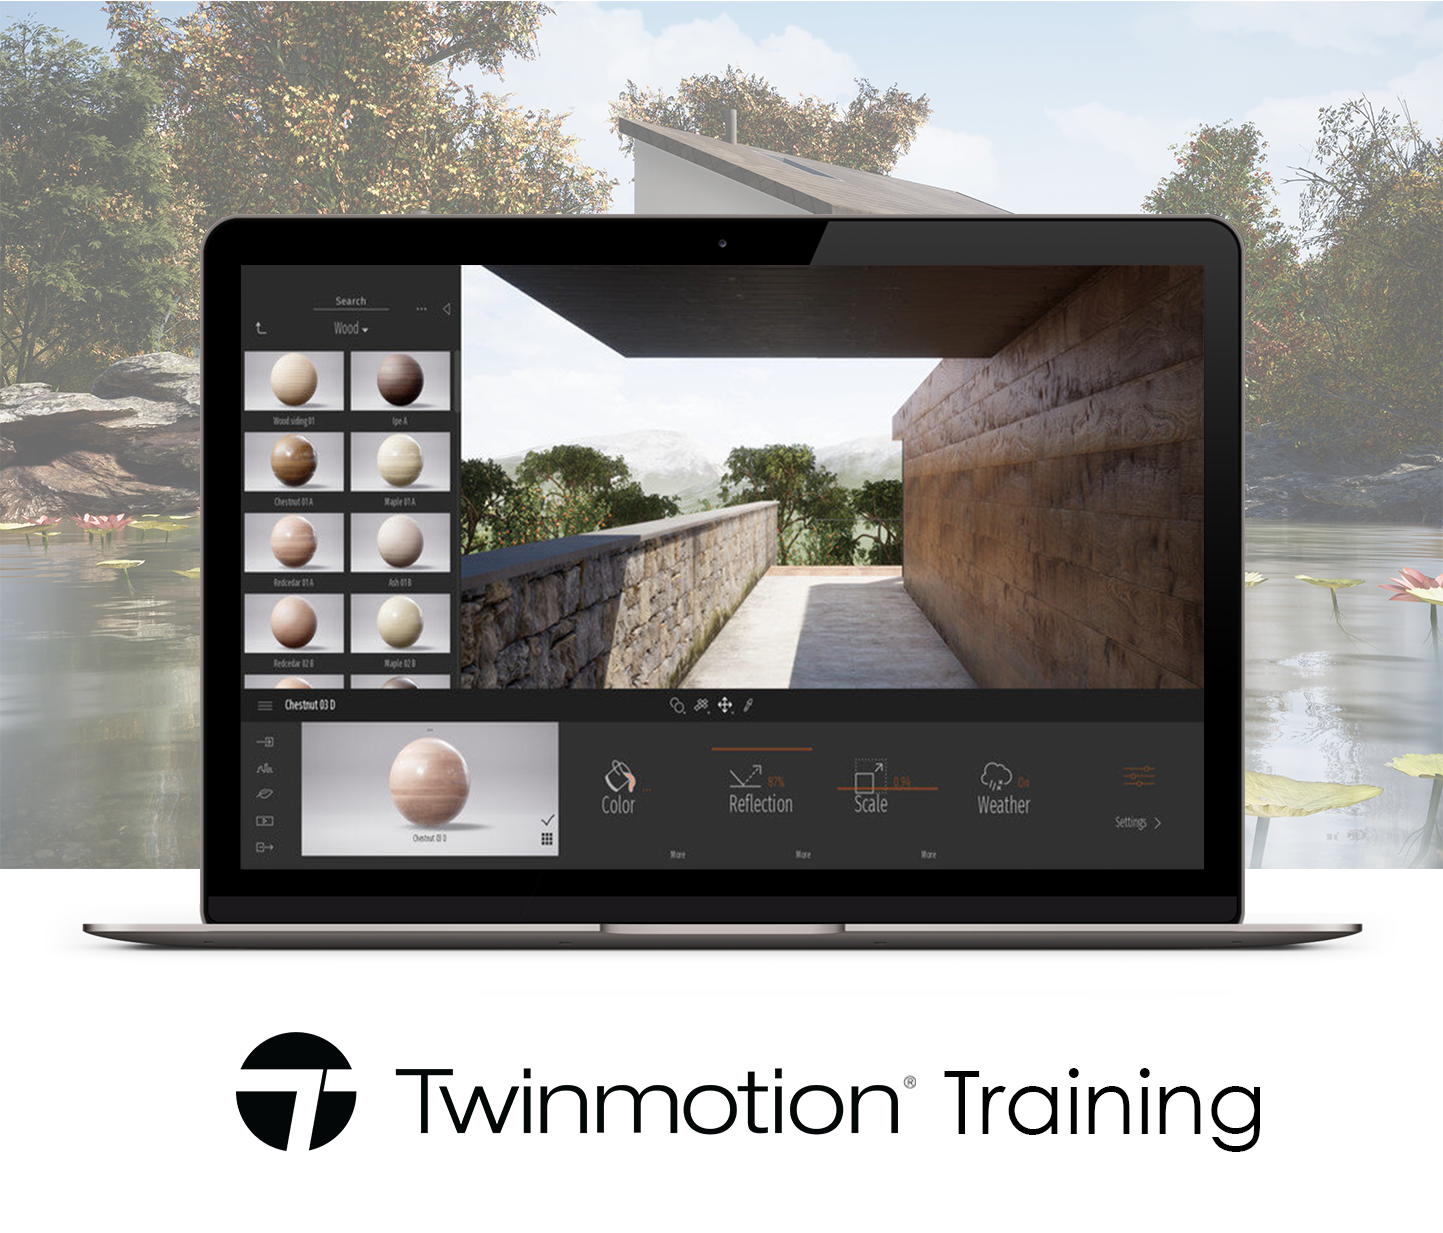 twinmotion training